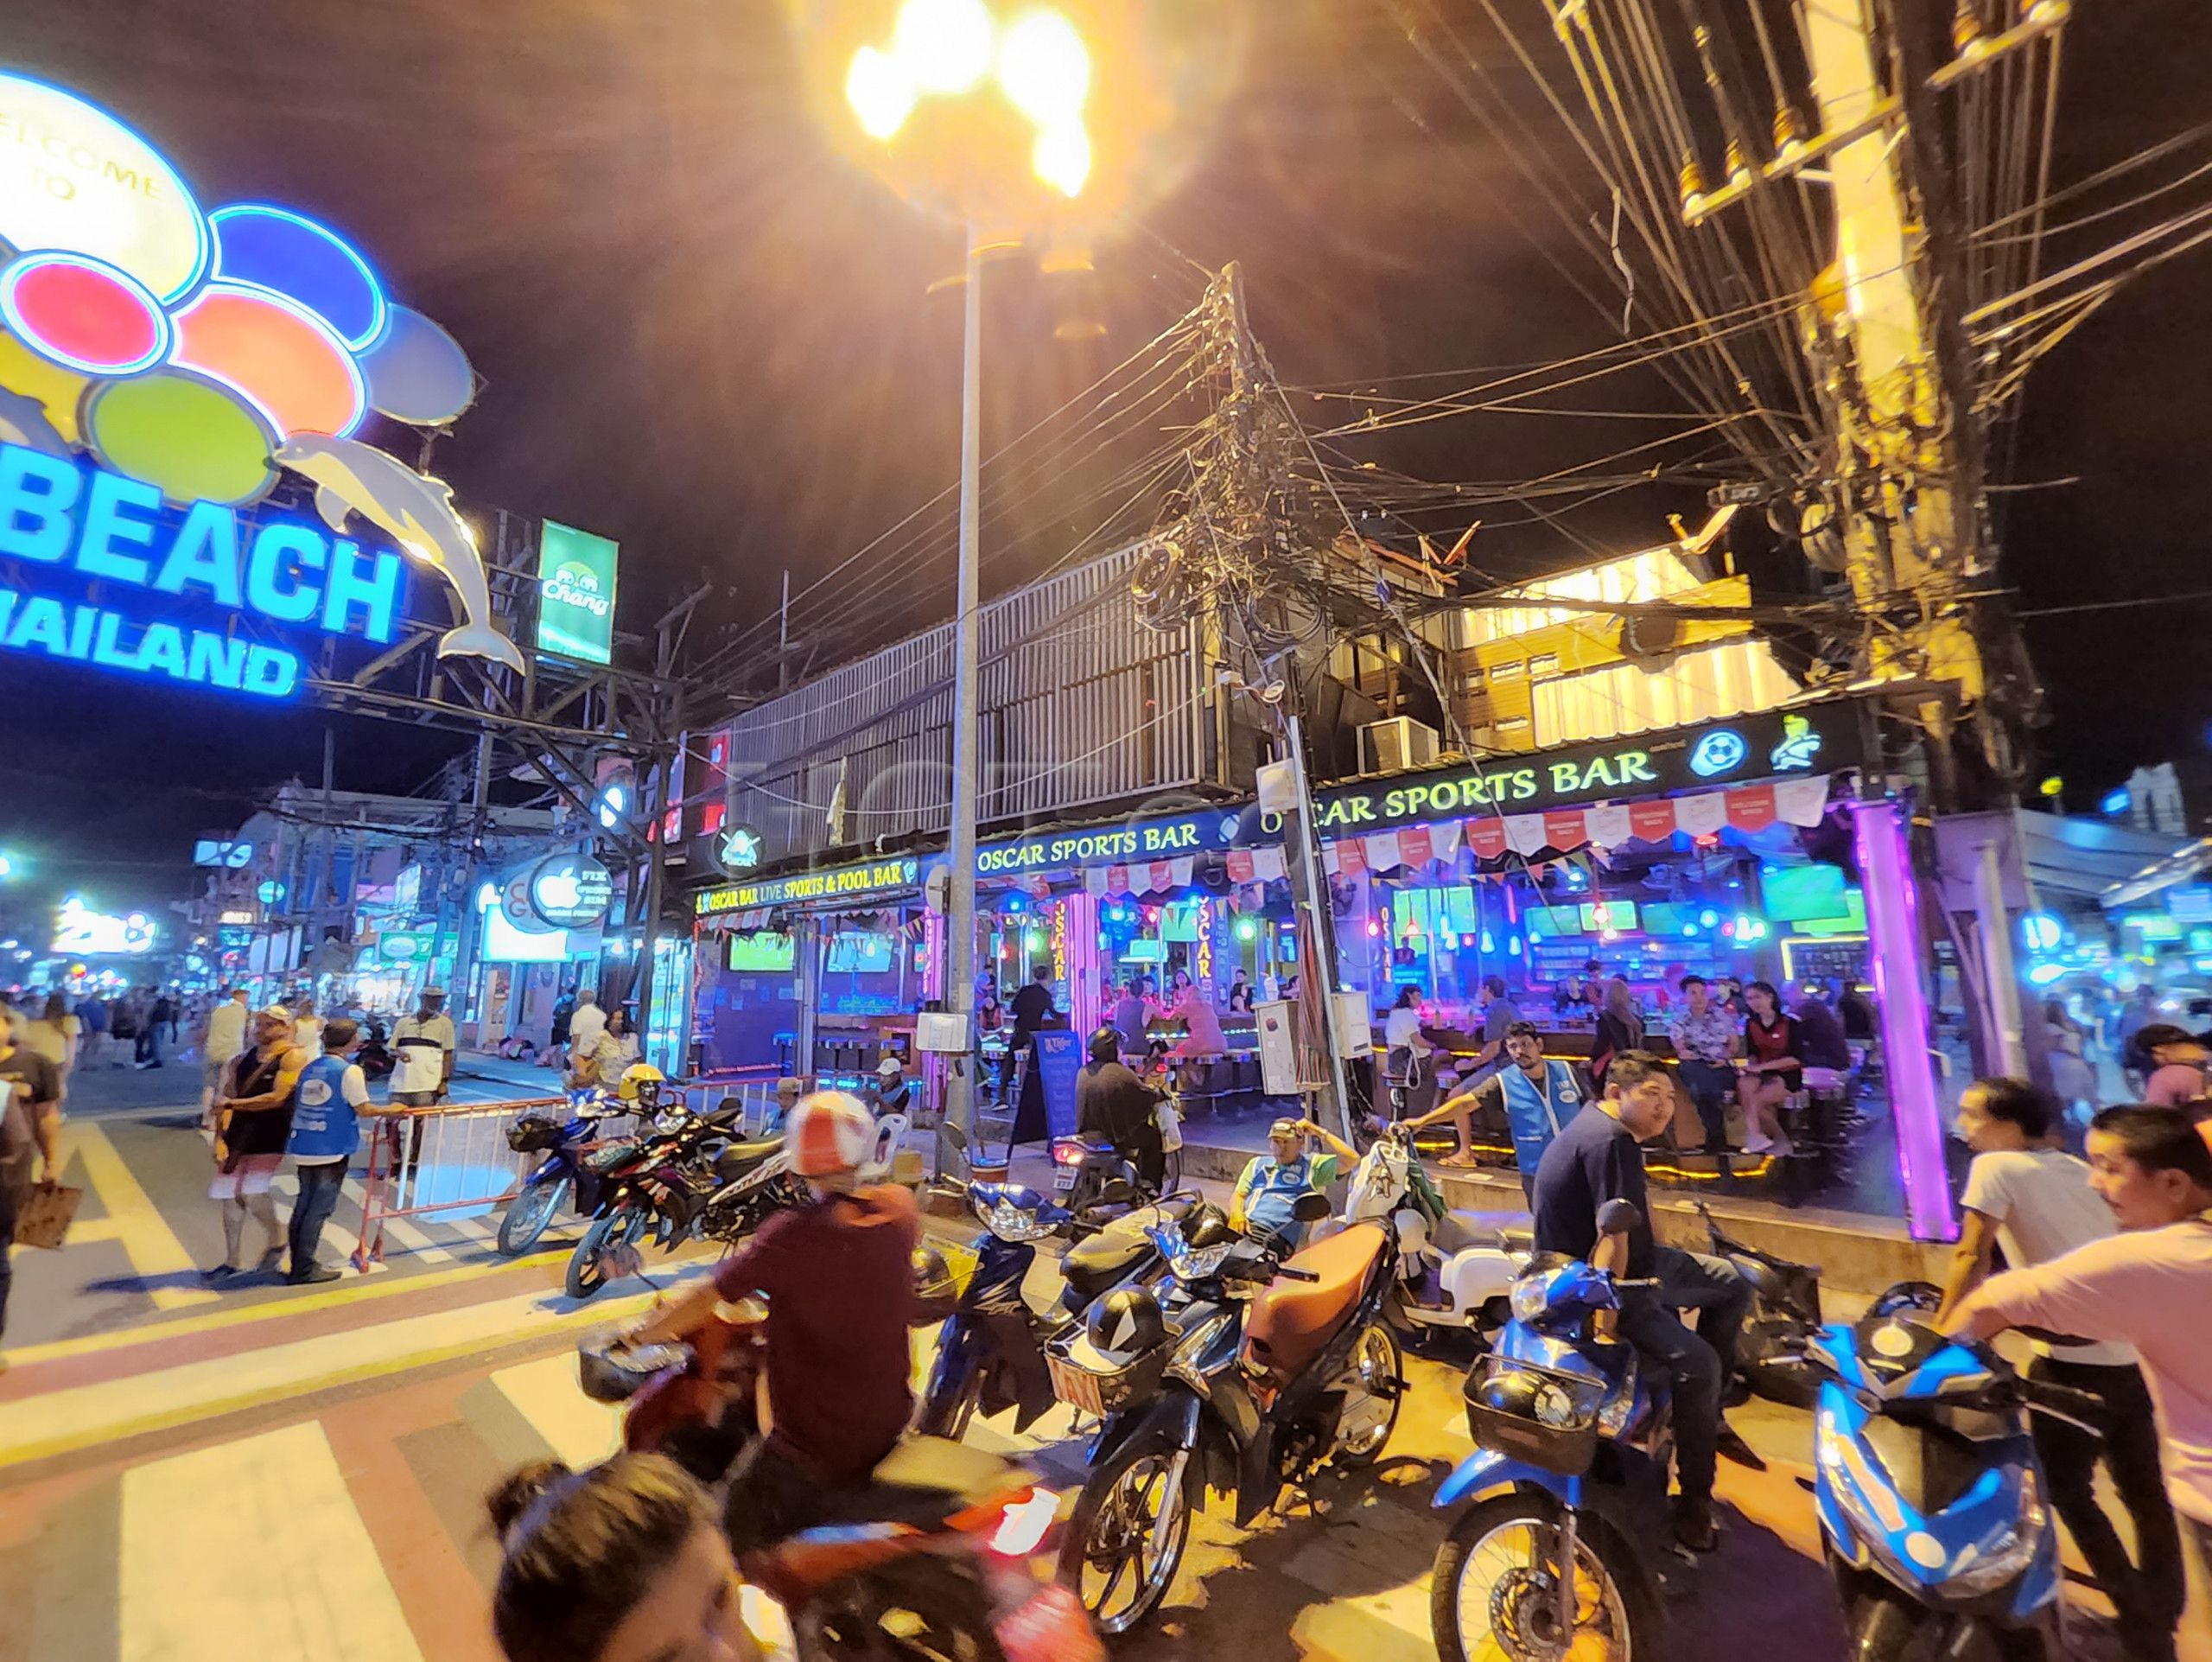 Patong, Thailand Oscar Bar